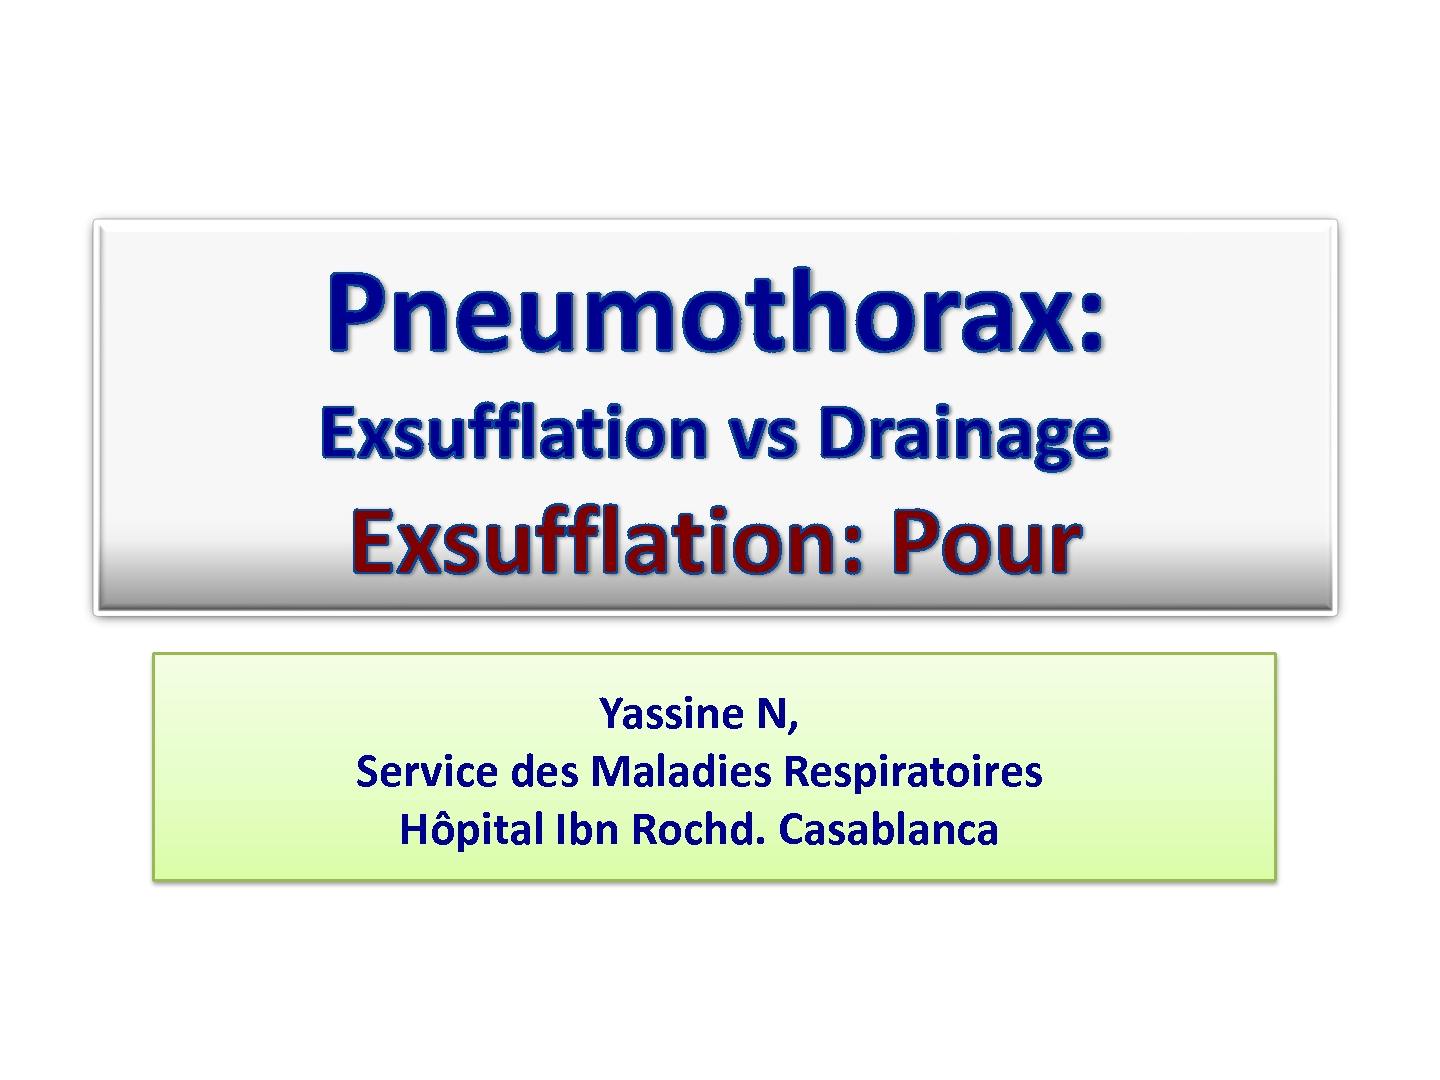 Pneumothorax, Exsufflation vs Drainage. N. YASSINE